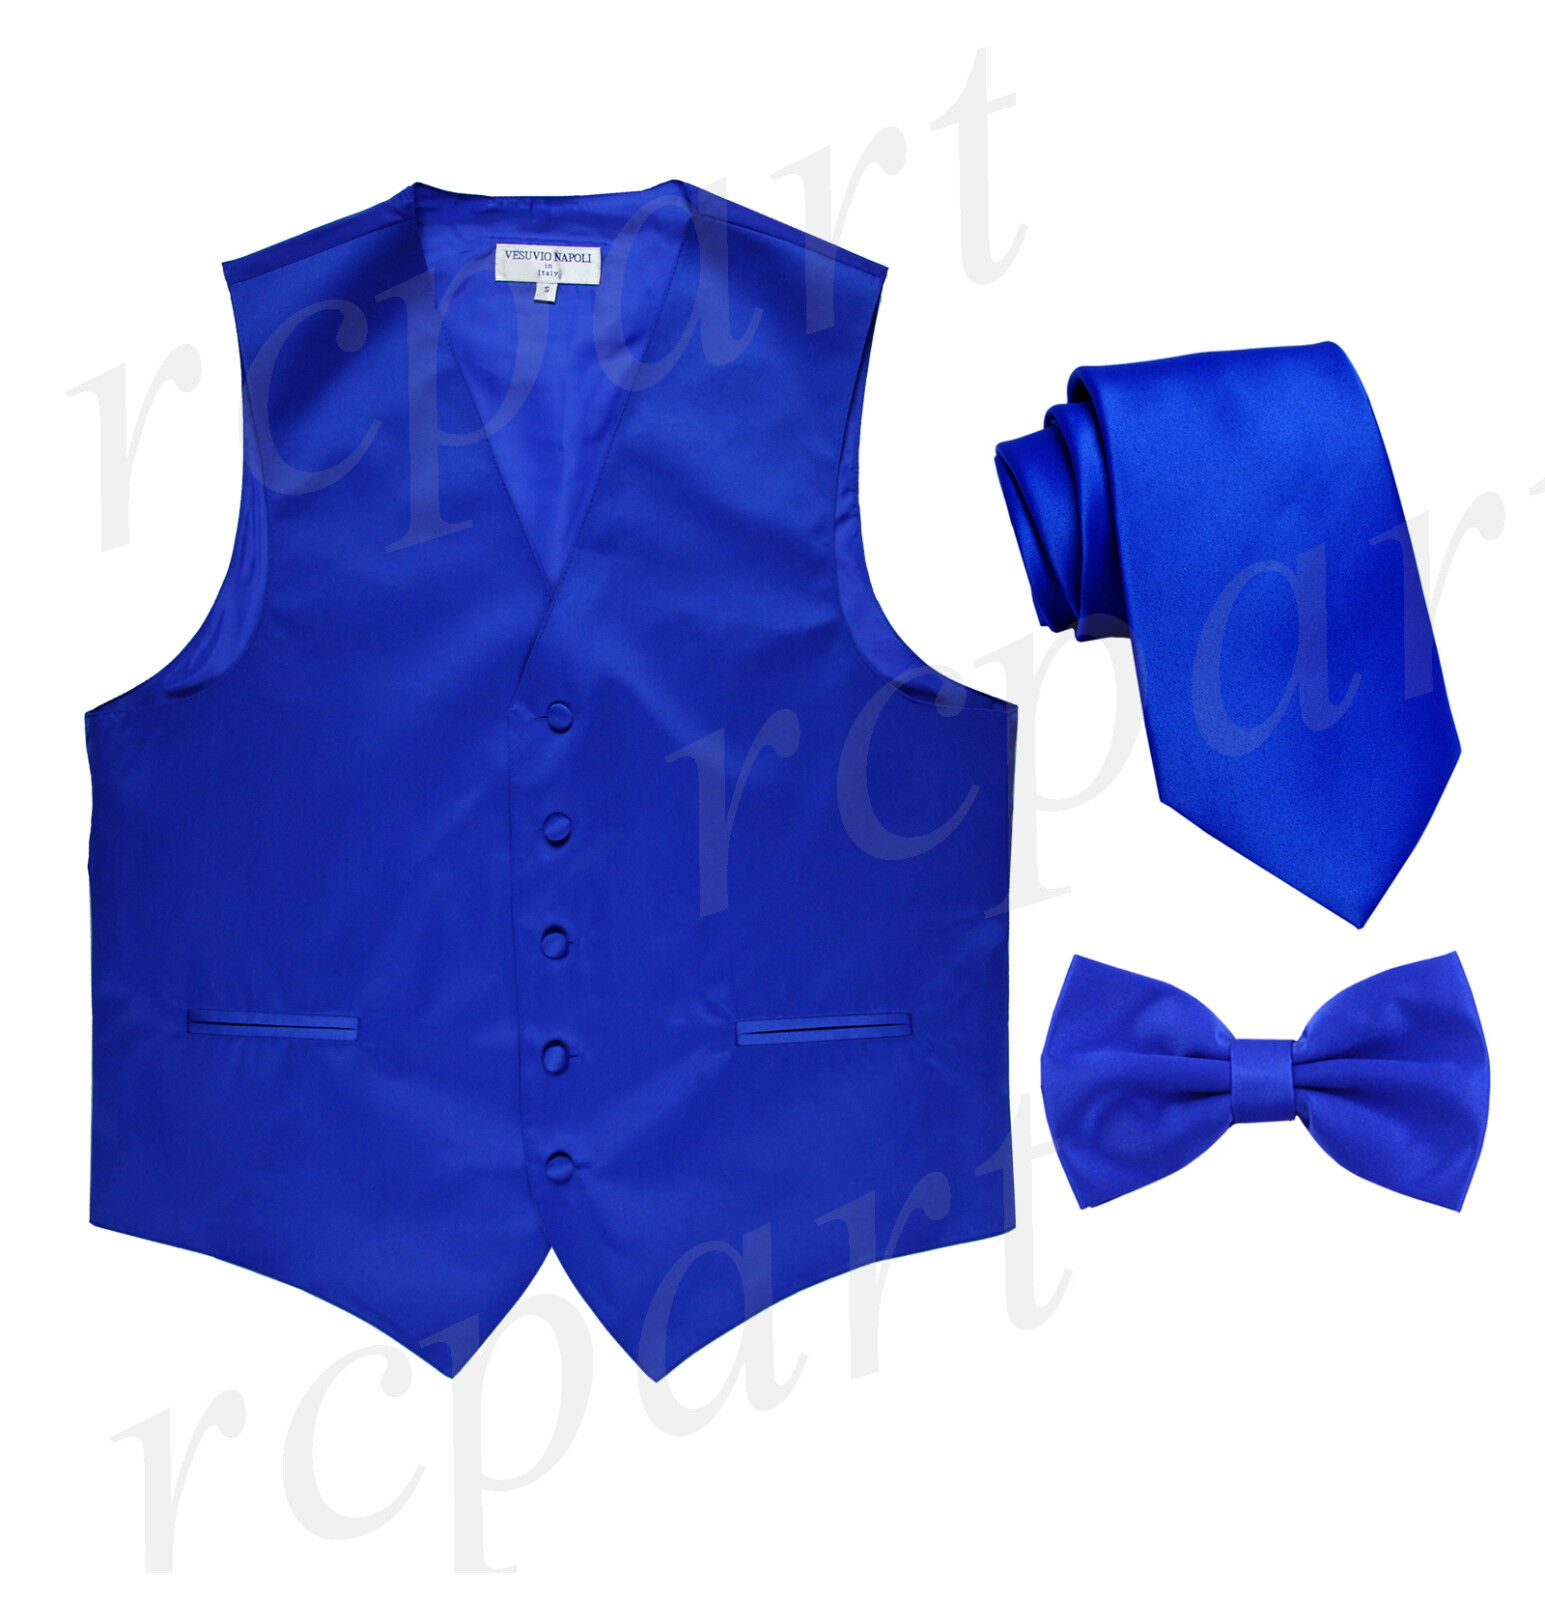 New Men's royal sold out blue formal Tuxedo Popular standard Waistcoat_necktie bowt vest